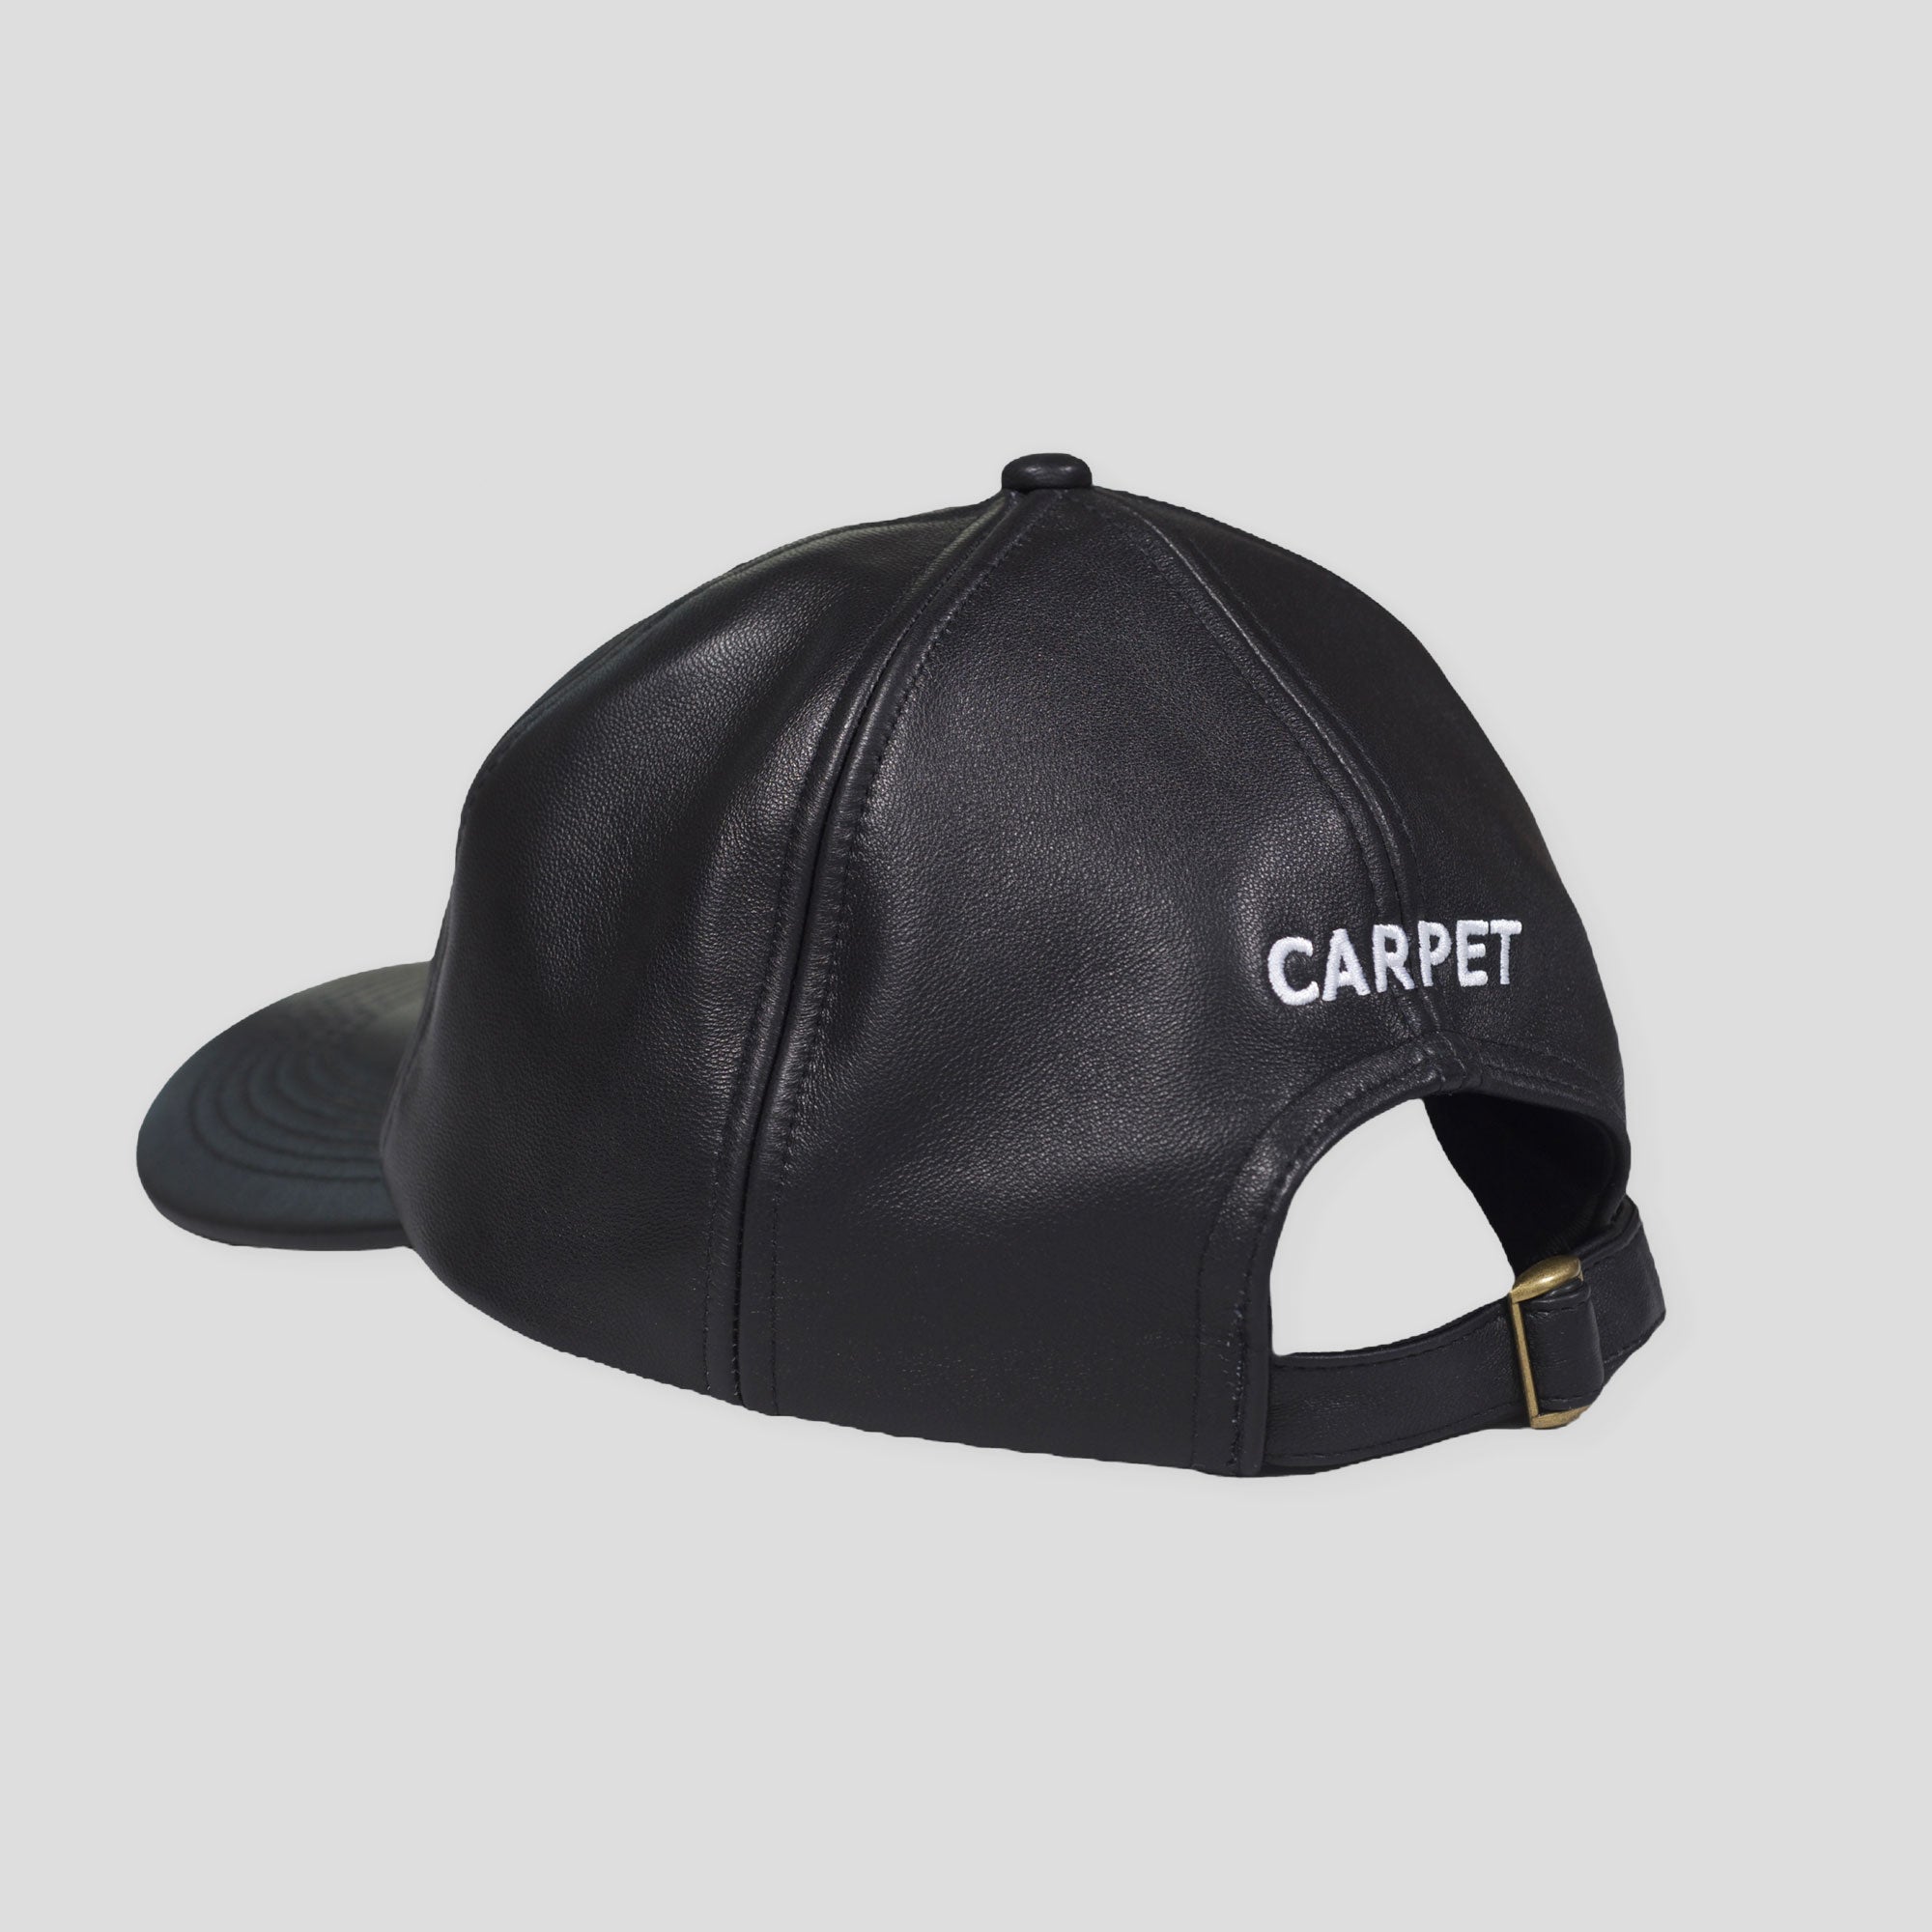 Carpet Company C-Star Leather Cap - Black